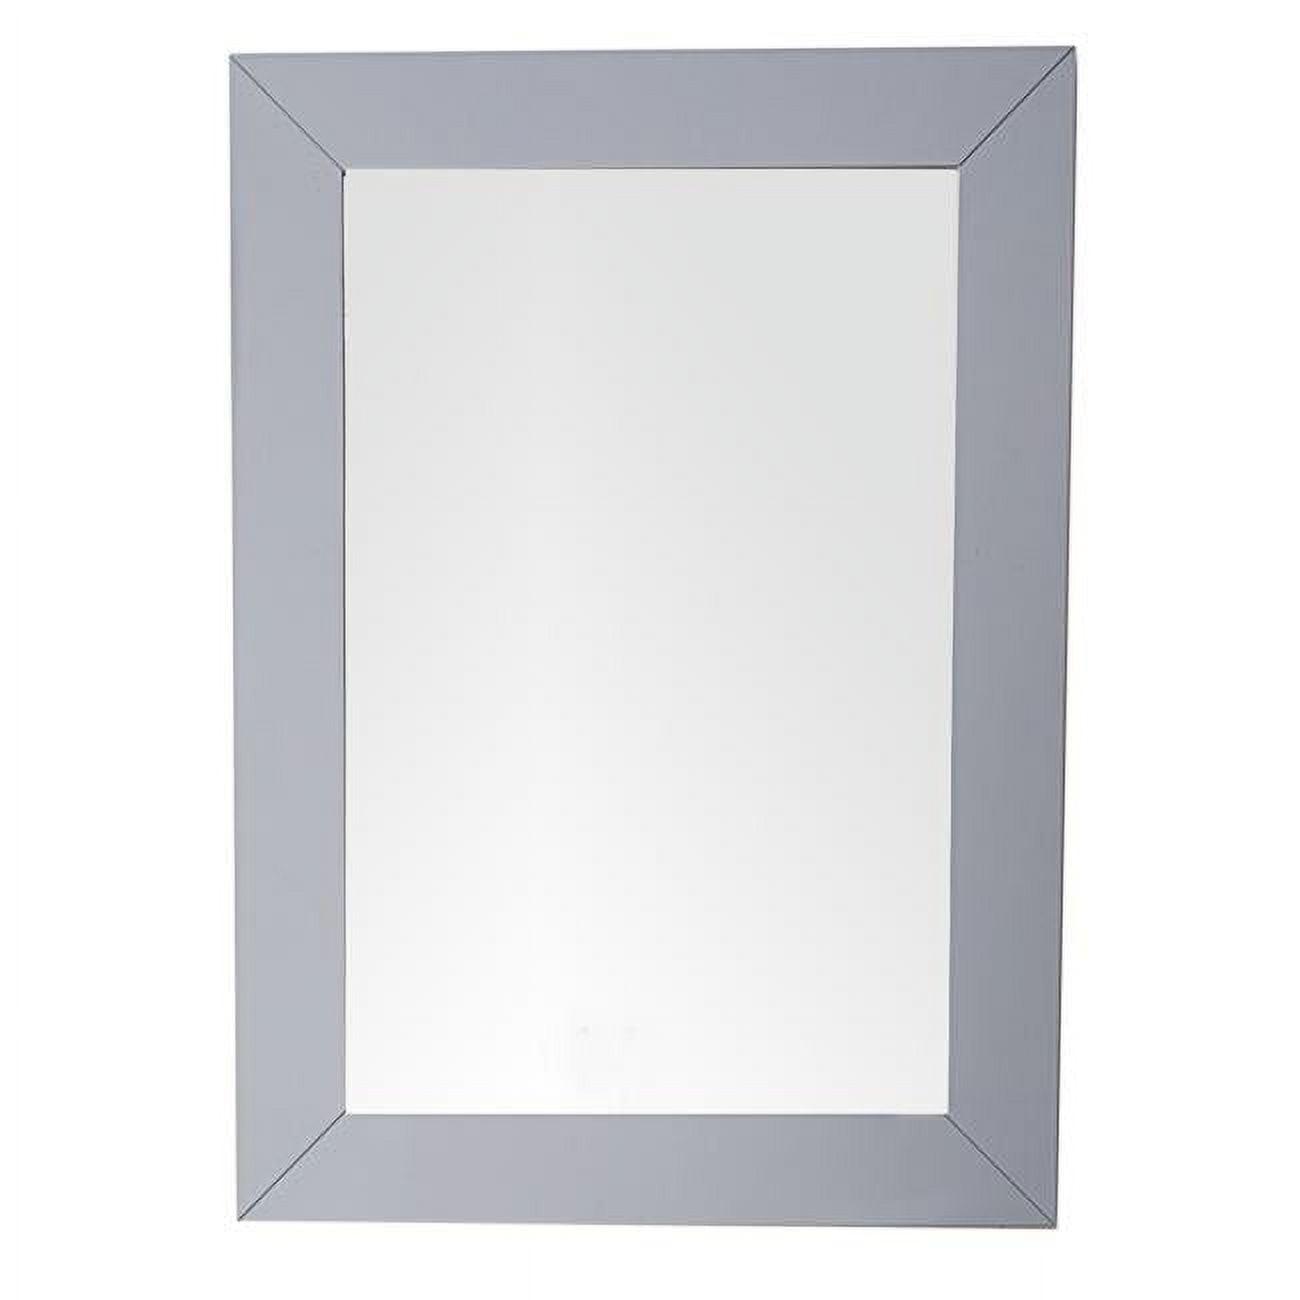 Weston 40"x29" Transitional Rectangular Wood Mirror in Silver Gray